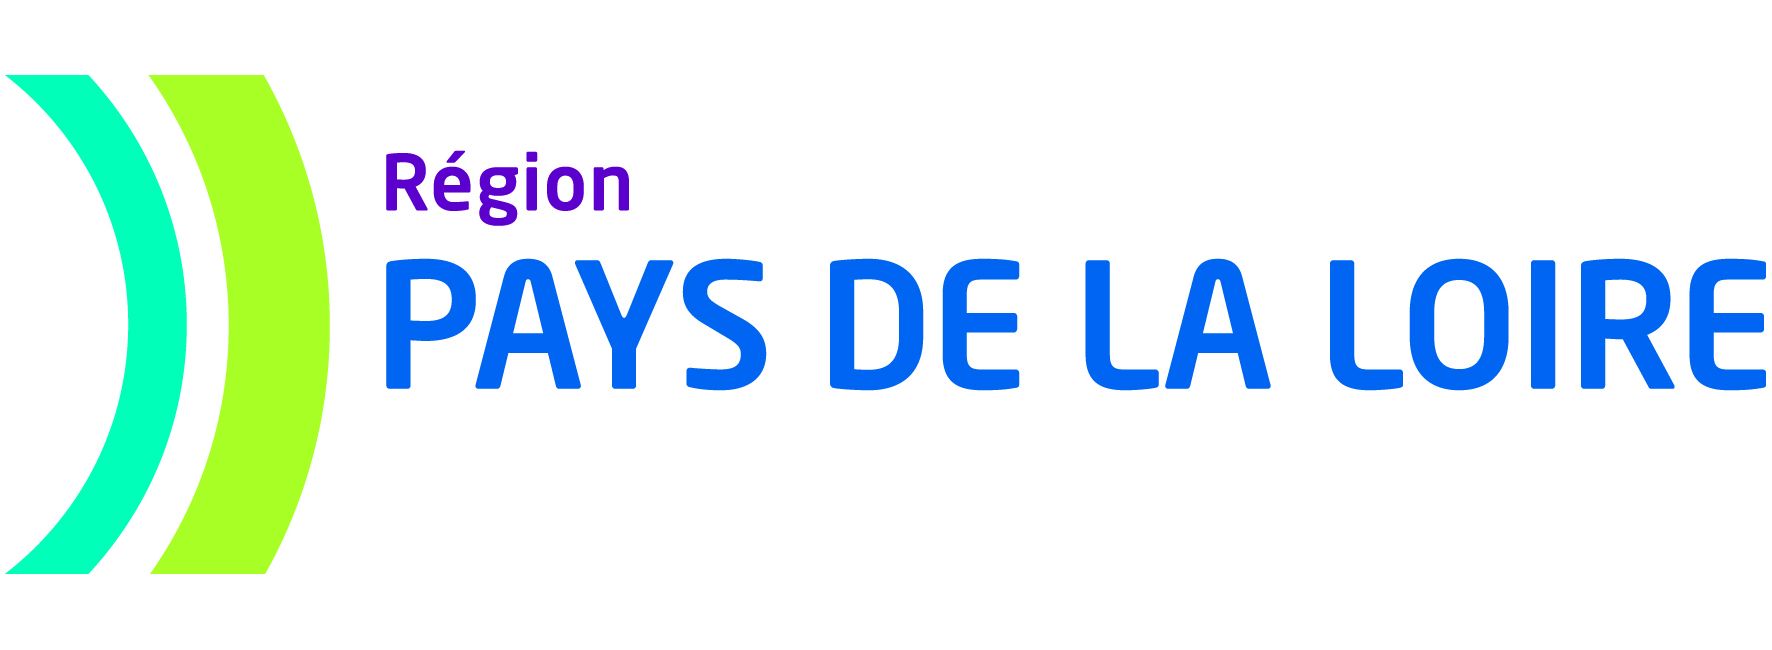 wp-content/uploads/2020/08/Logo-Region-Pays-de-la-Loire.jpg